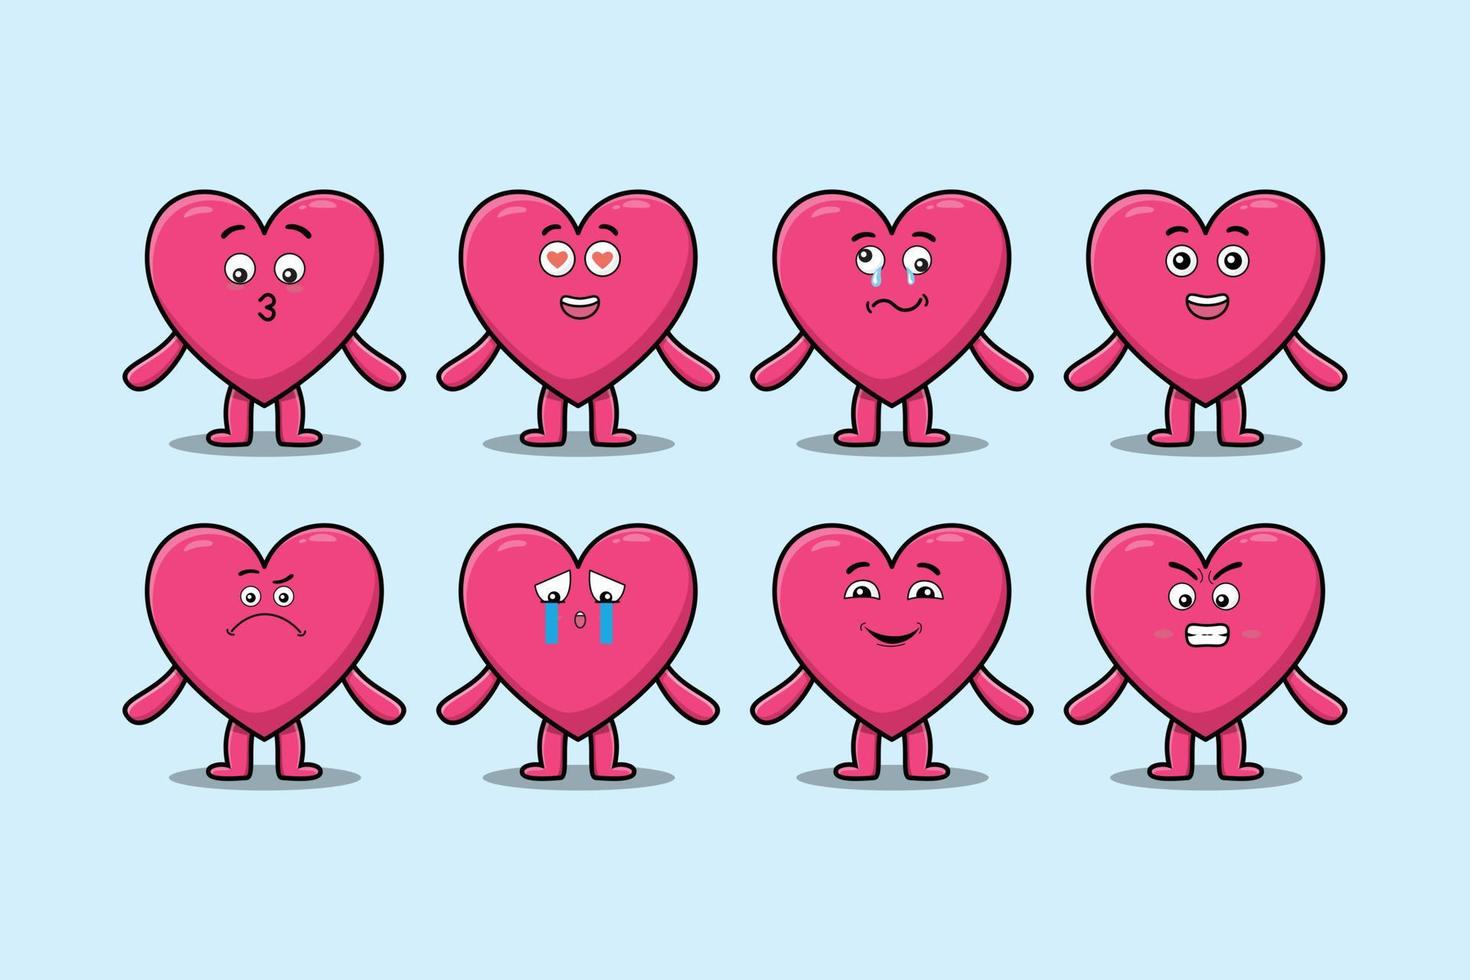 kawaii lovely heart cartoon different expression vector